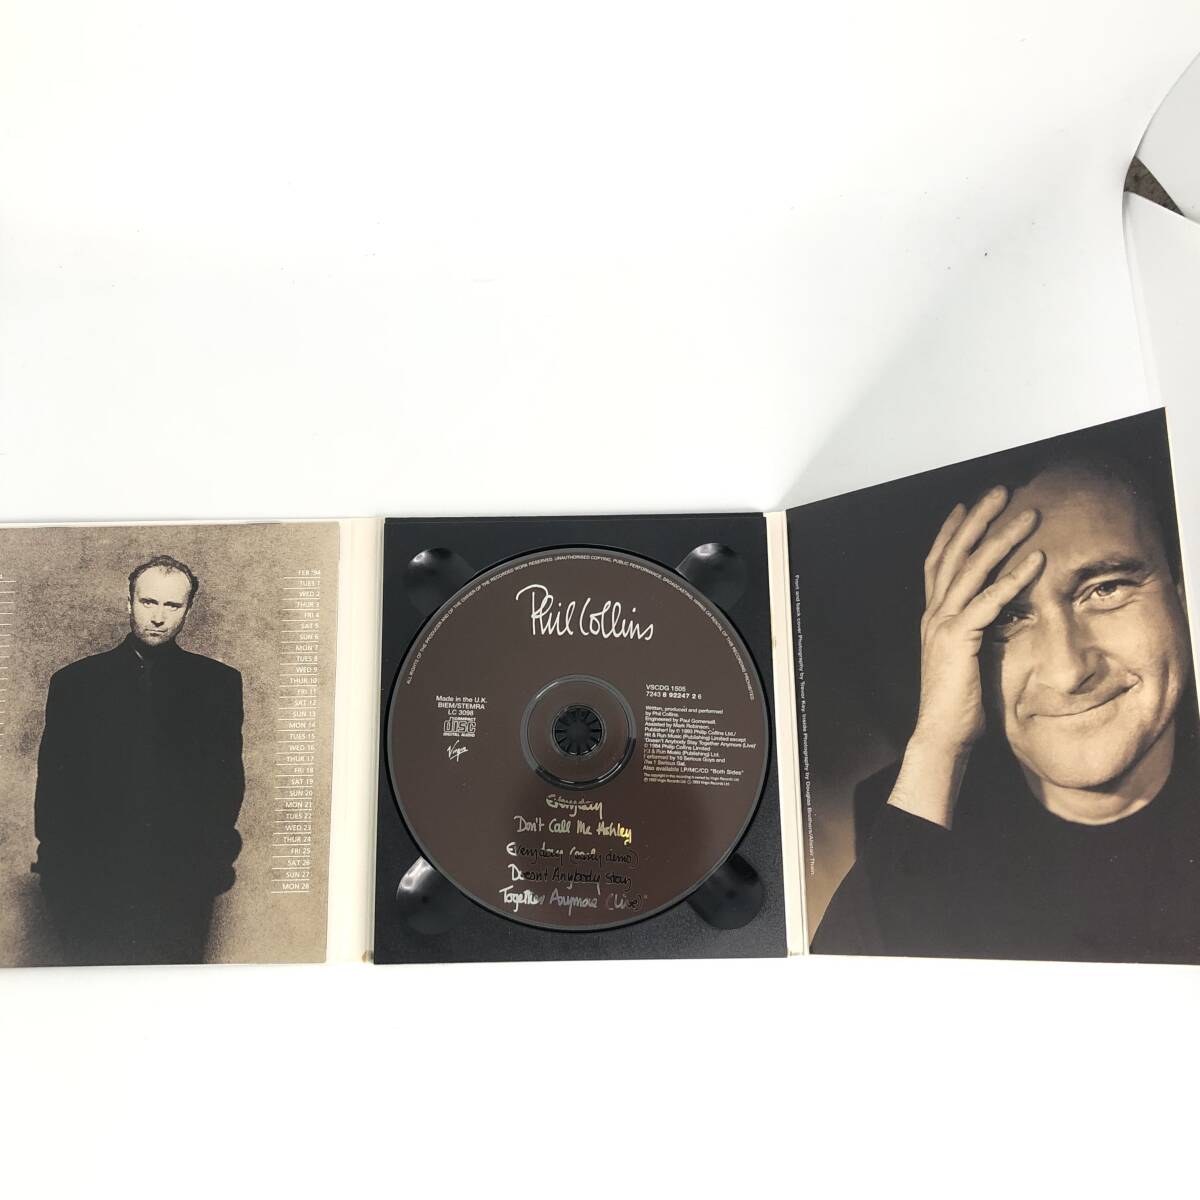 UK盤 中古CD カレンダー付き Phil Collins Everyday フィル・コリンズ エヴリデイ Virgin VSCDG1505 個人所有 B_画像3